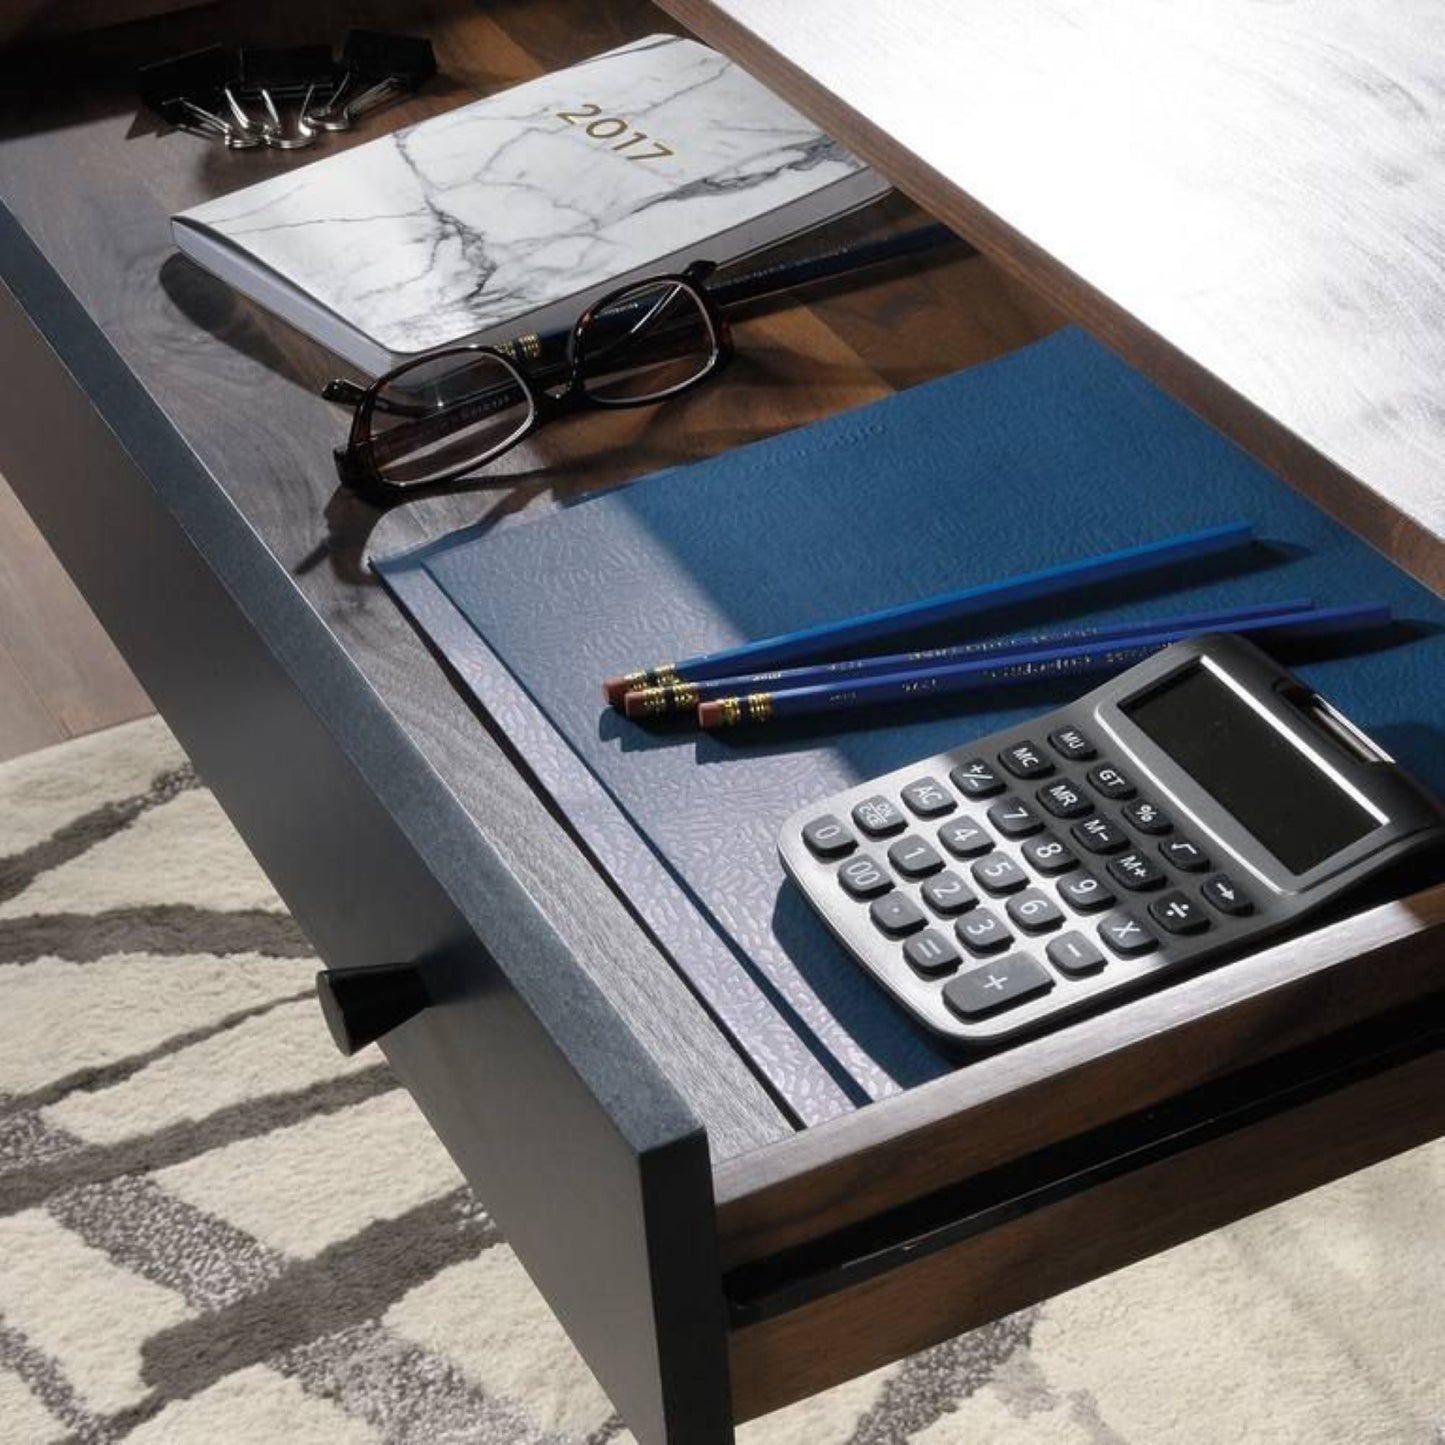 Mid Century style compact desk in Walnut finish- Office desk